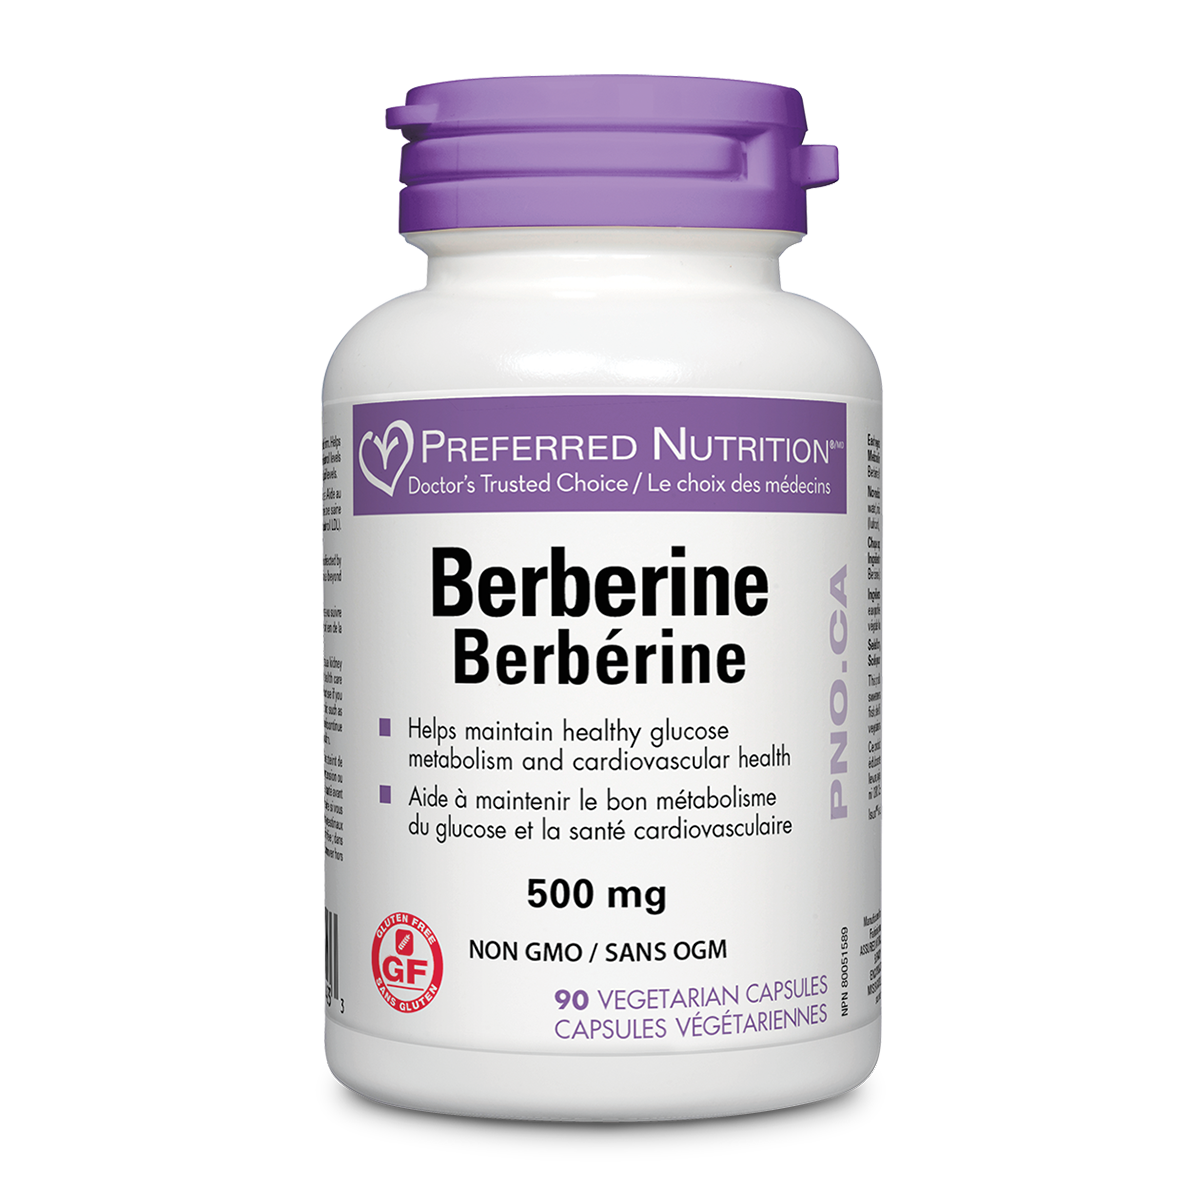 Preferred Nutrition Berberine 500mg 90s product image - Bottle of 90 vegetable capsules